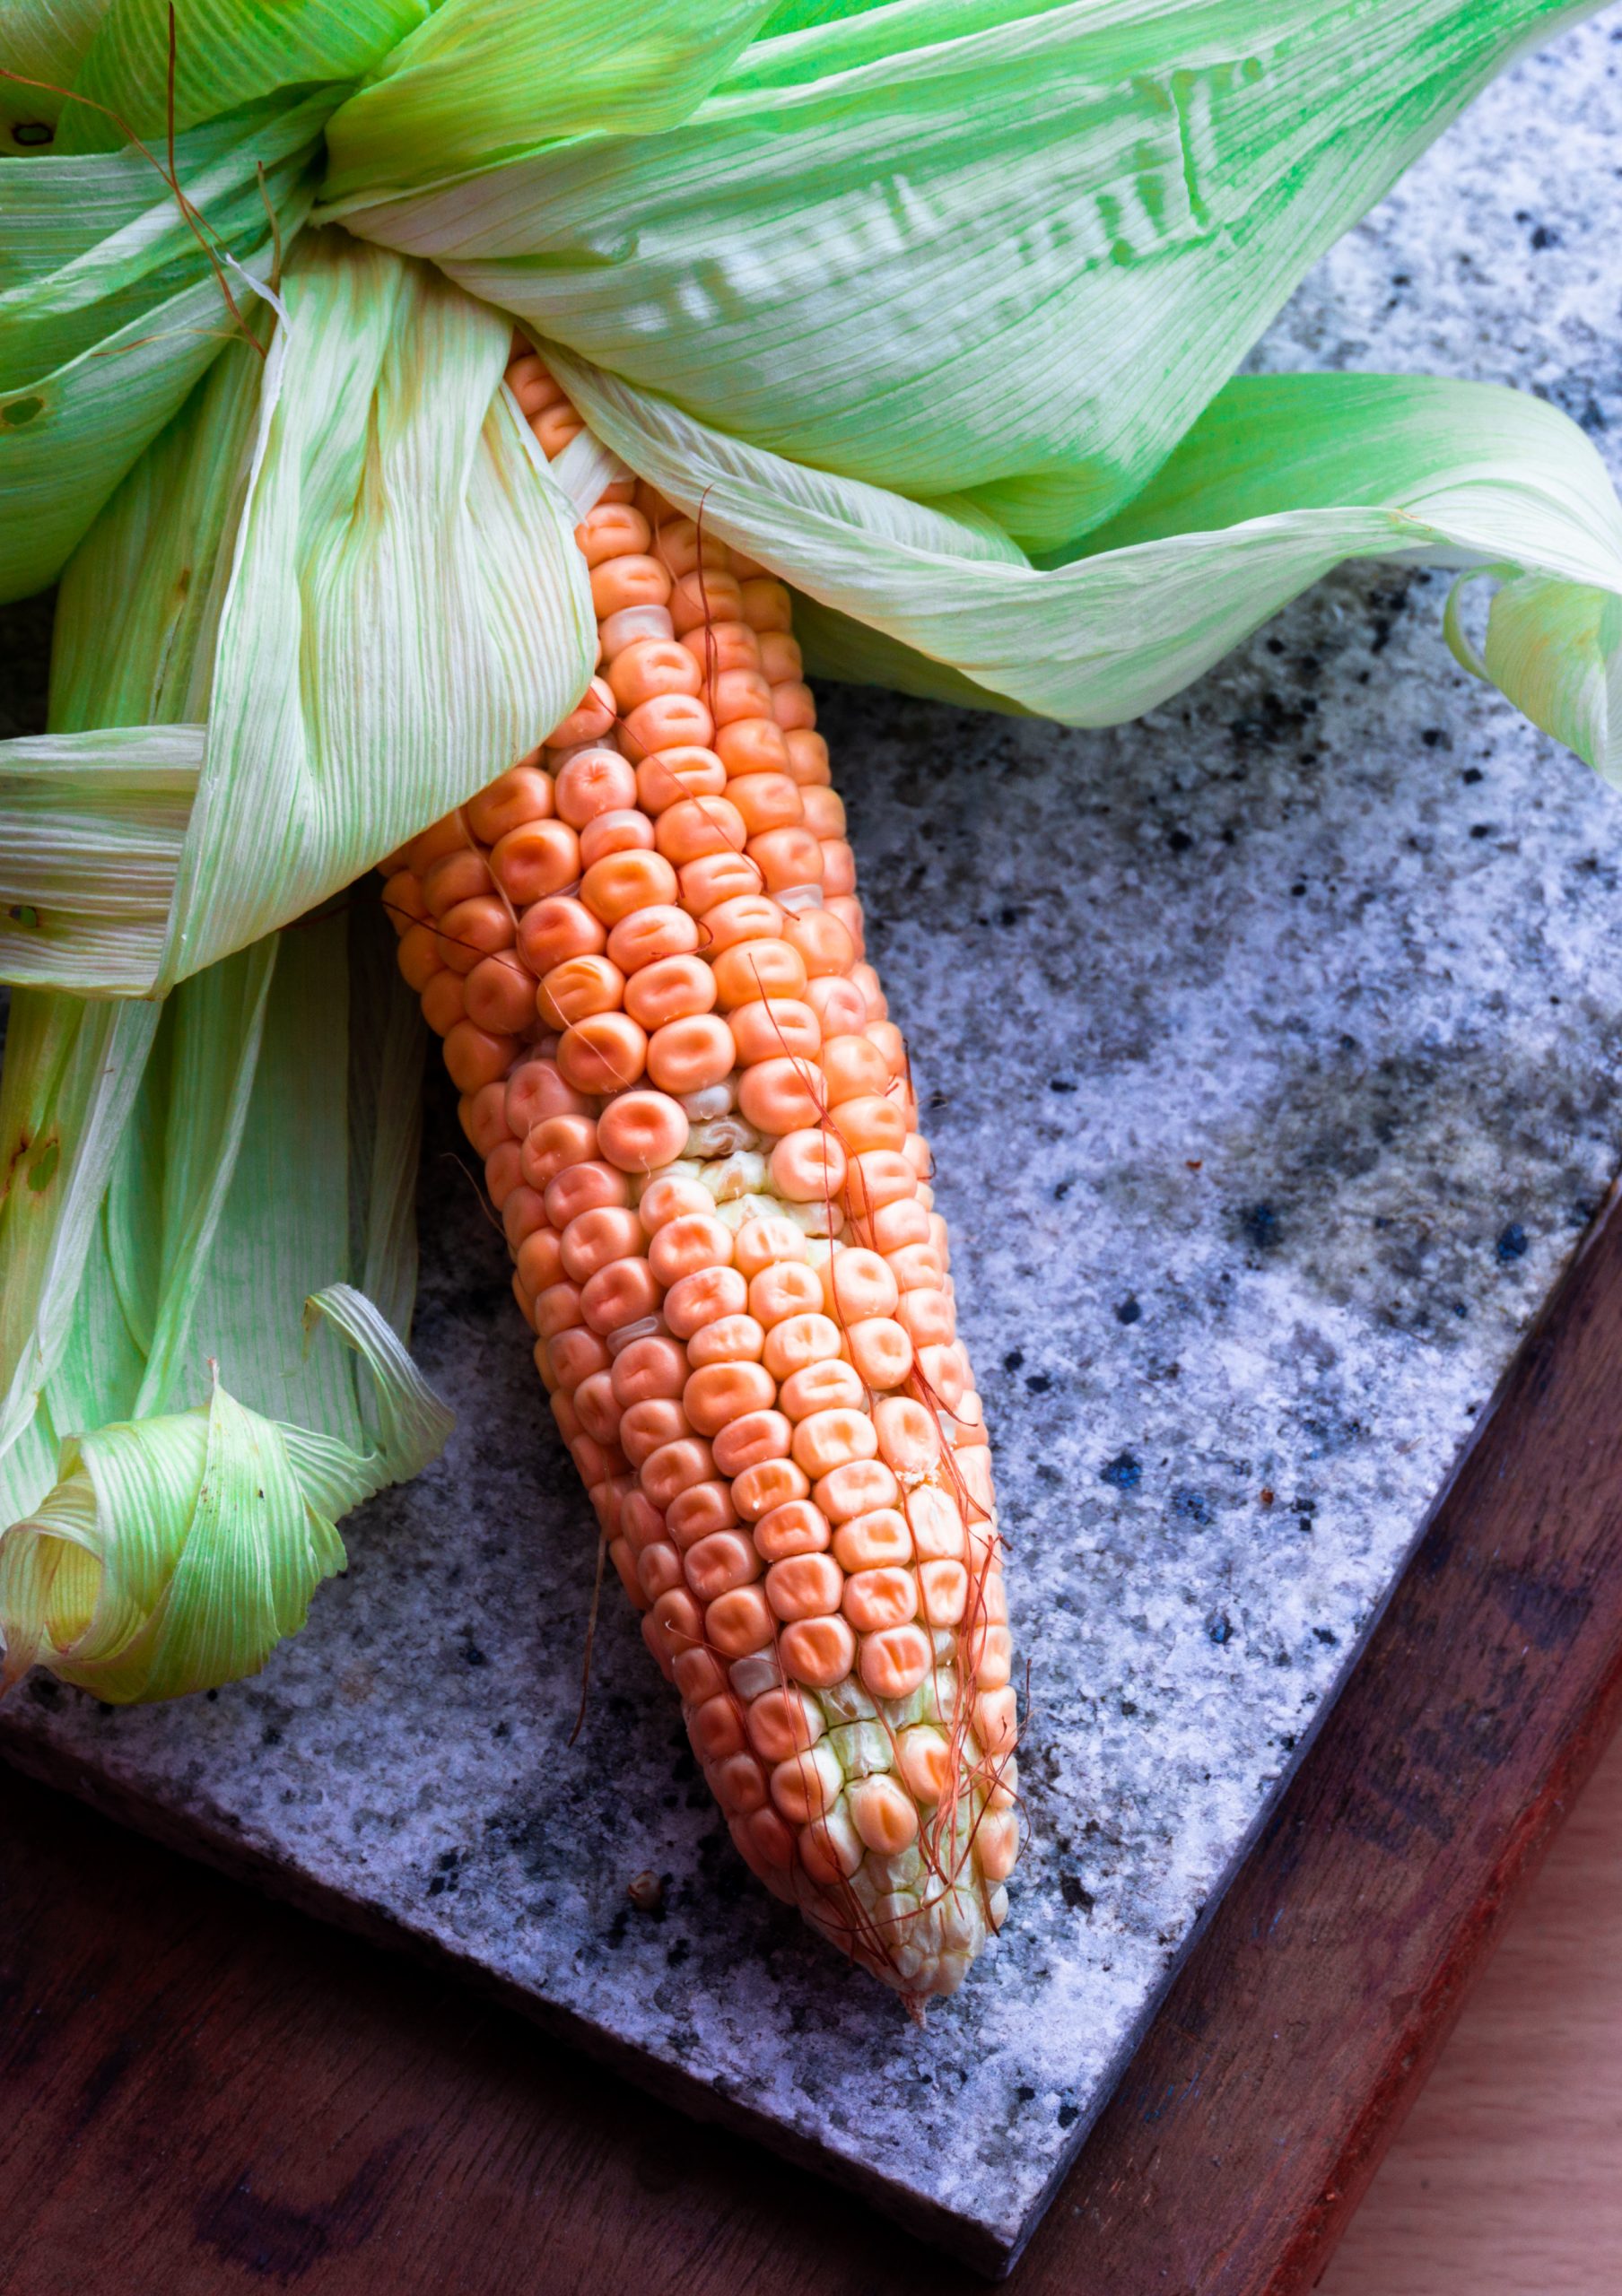 A raw corn cob